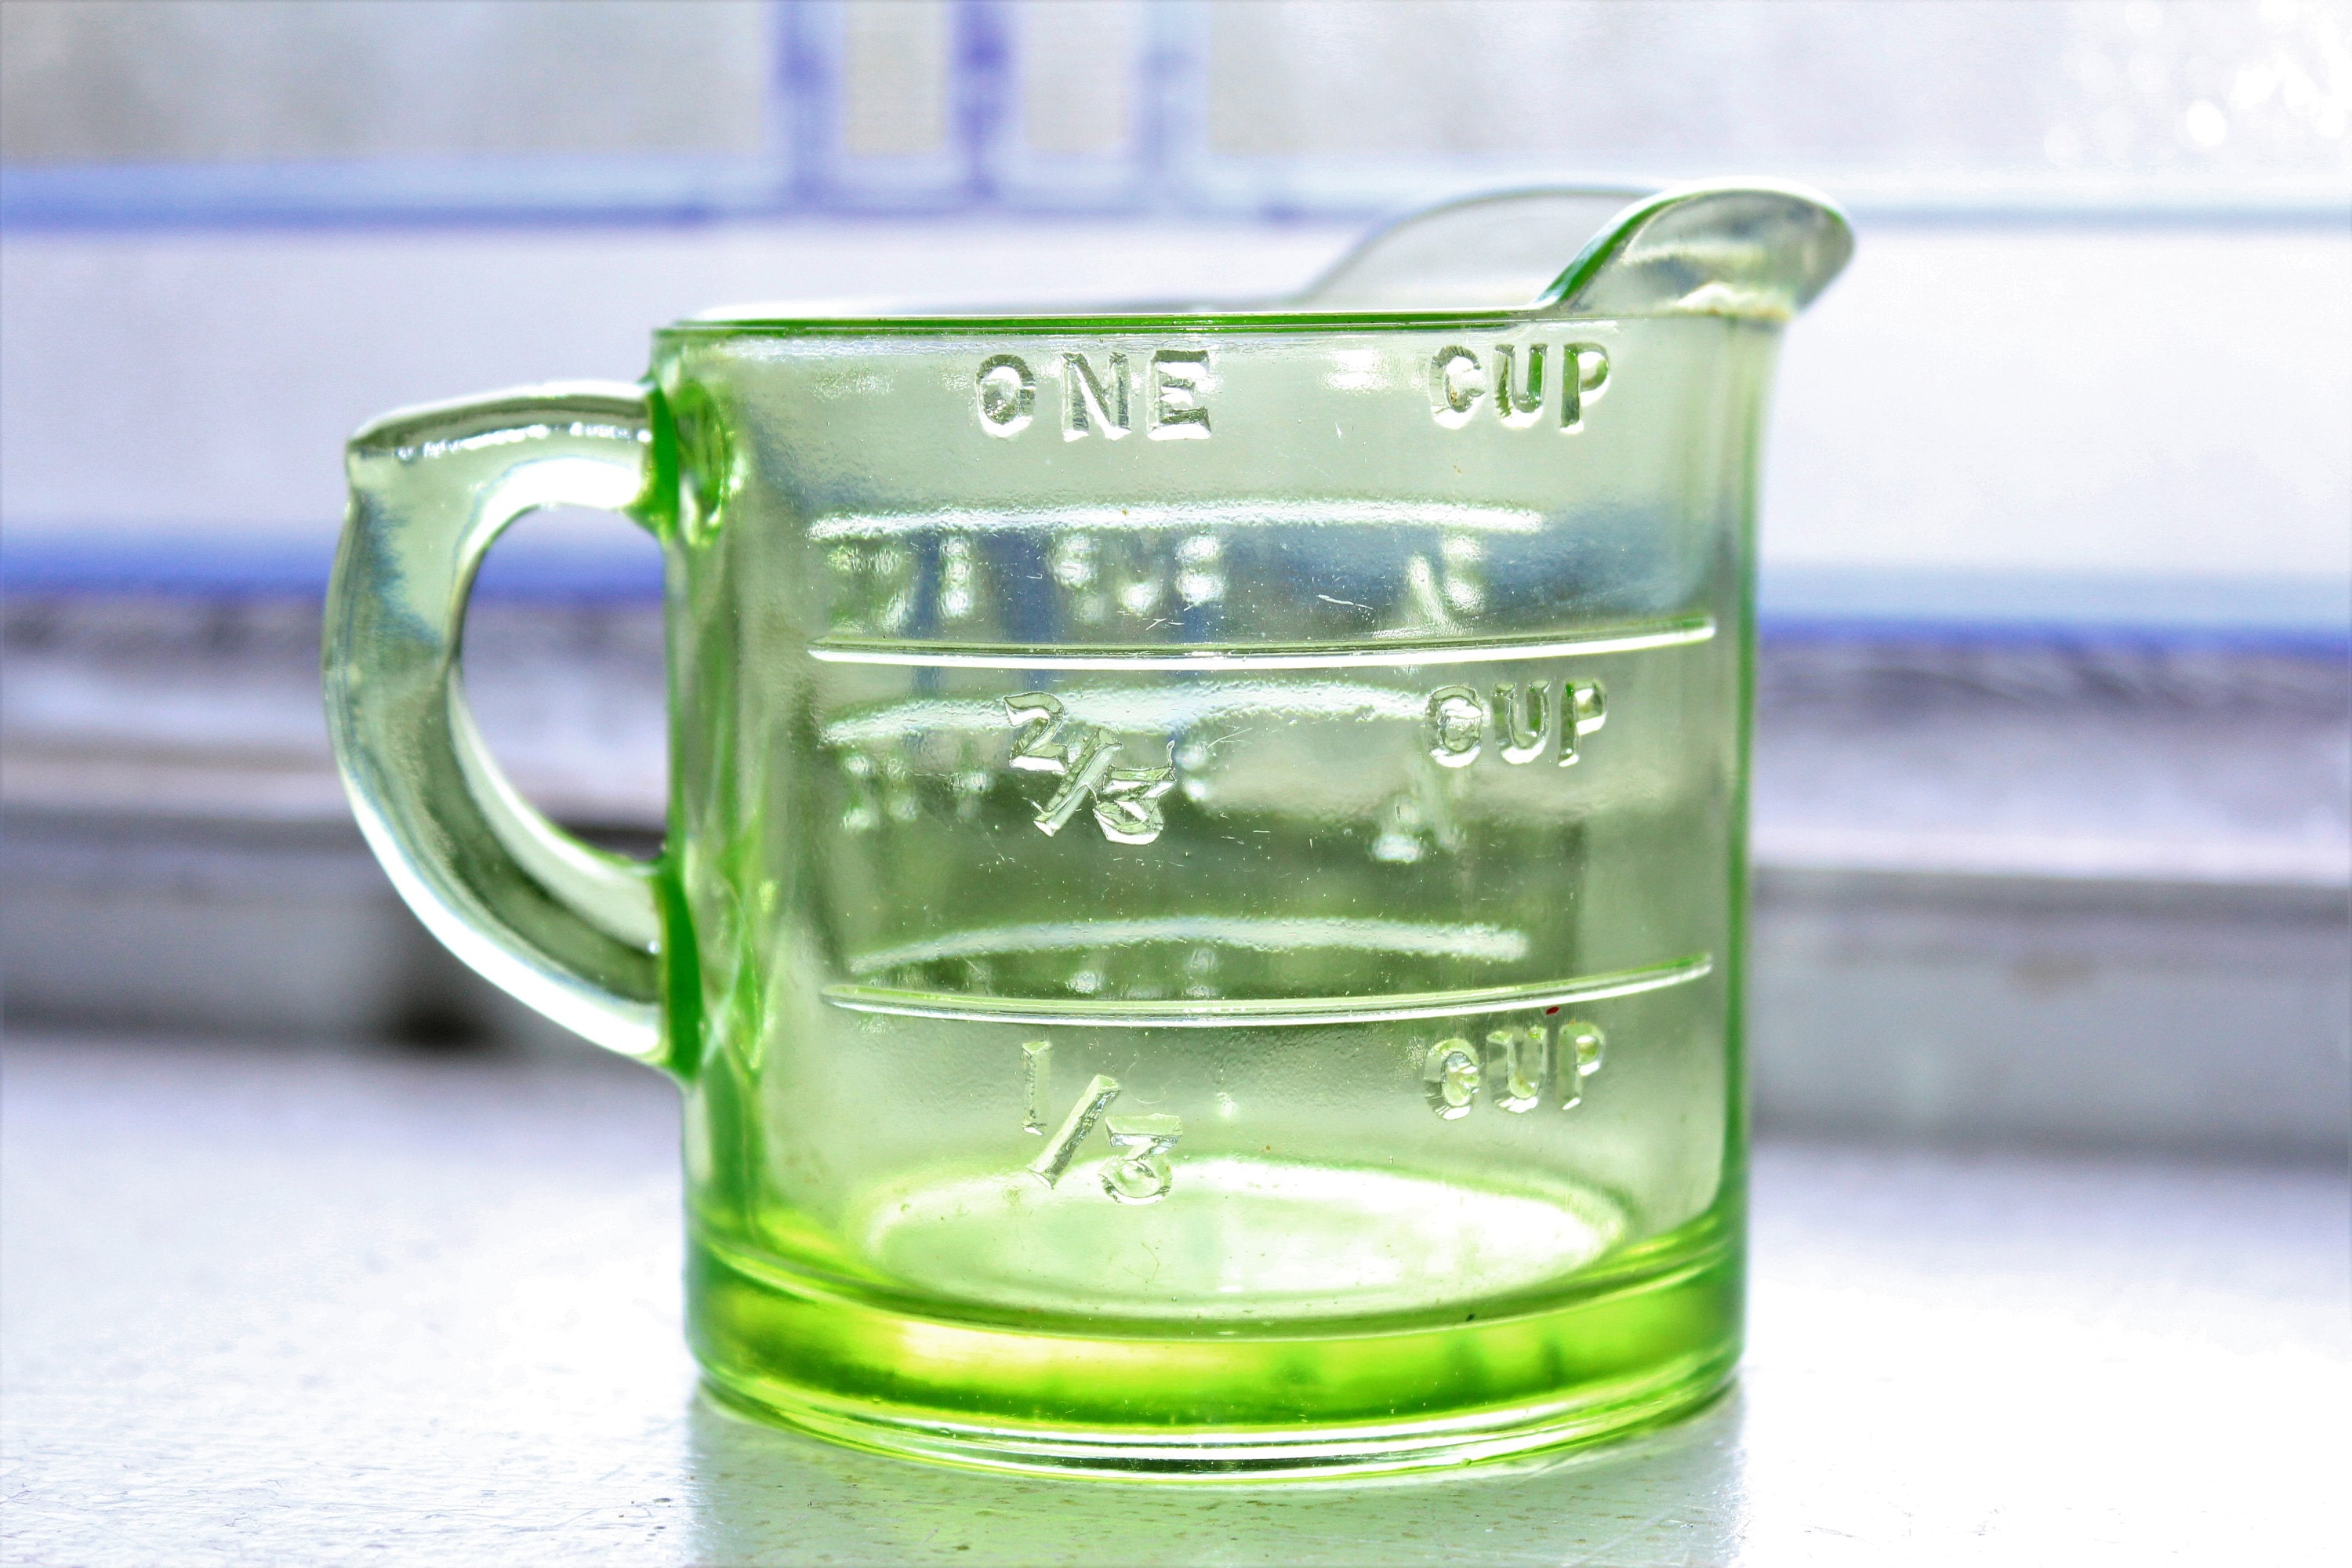  SHERCHPRY Measuring Cup Green Glass Measuring Cup